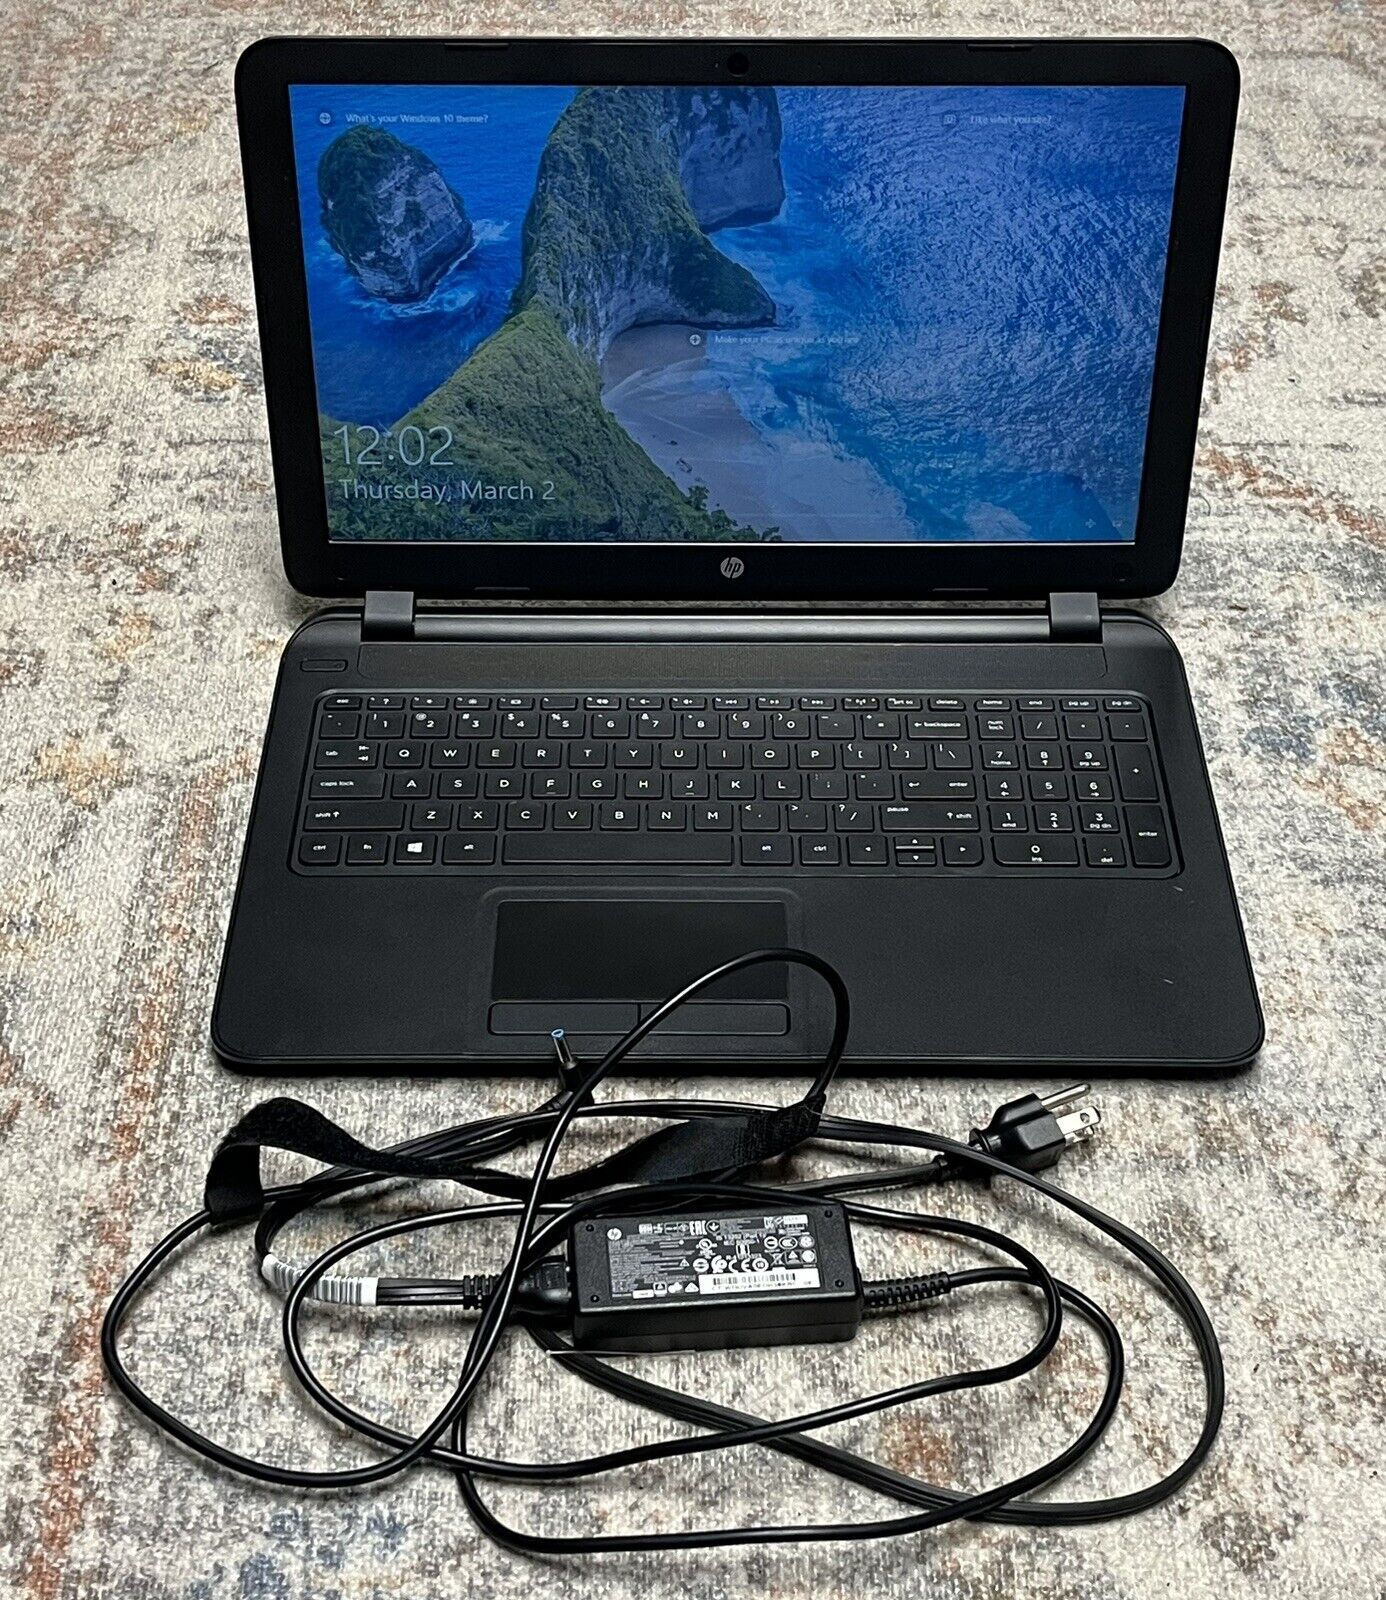 HP 15-1233wm Laptop Celeron N3050 1.6GHz 4GB 500GB Windows 15” Screen